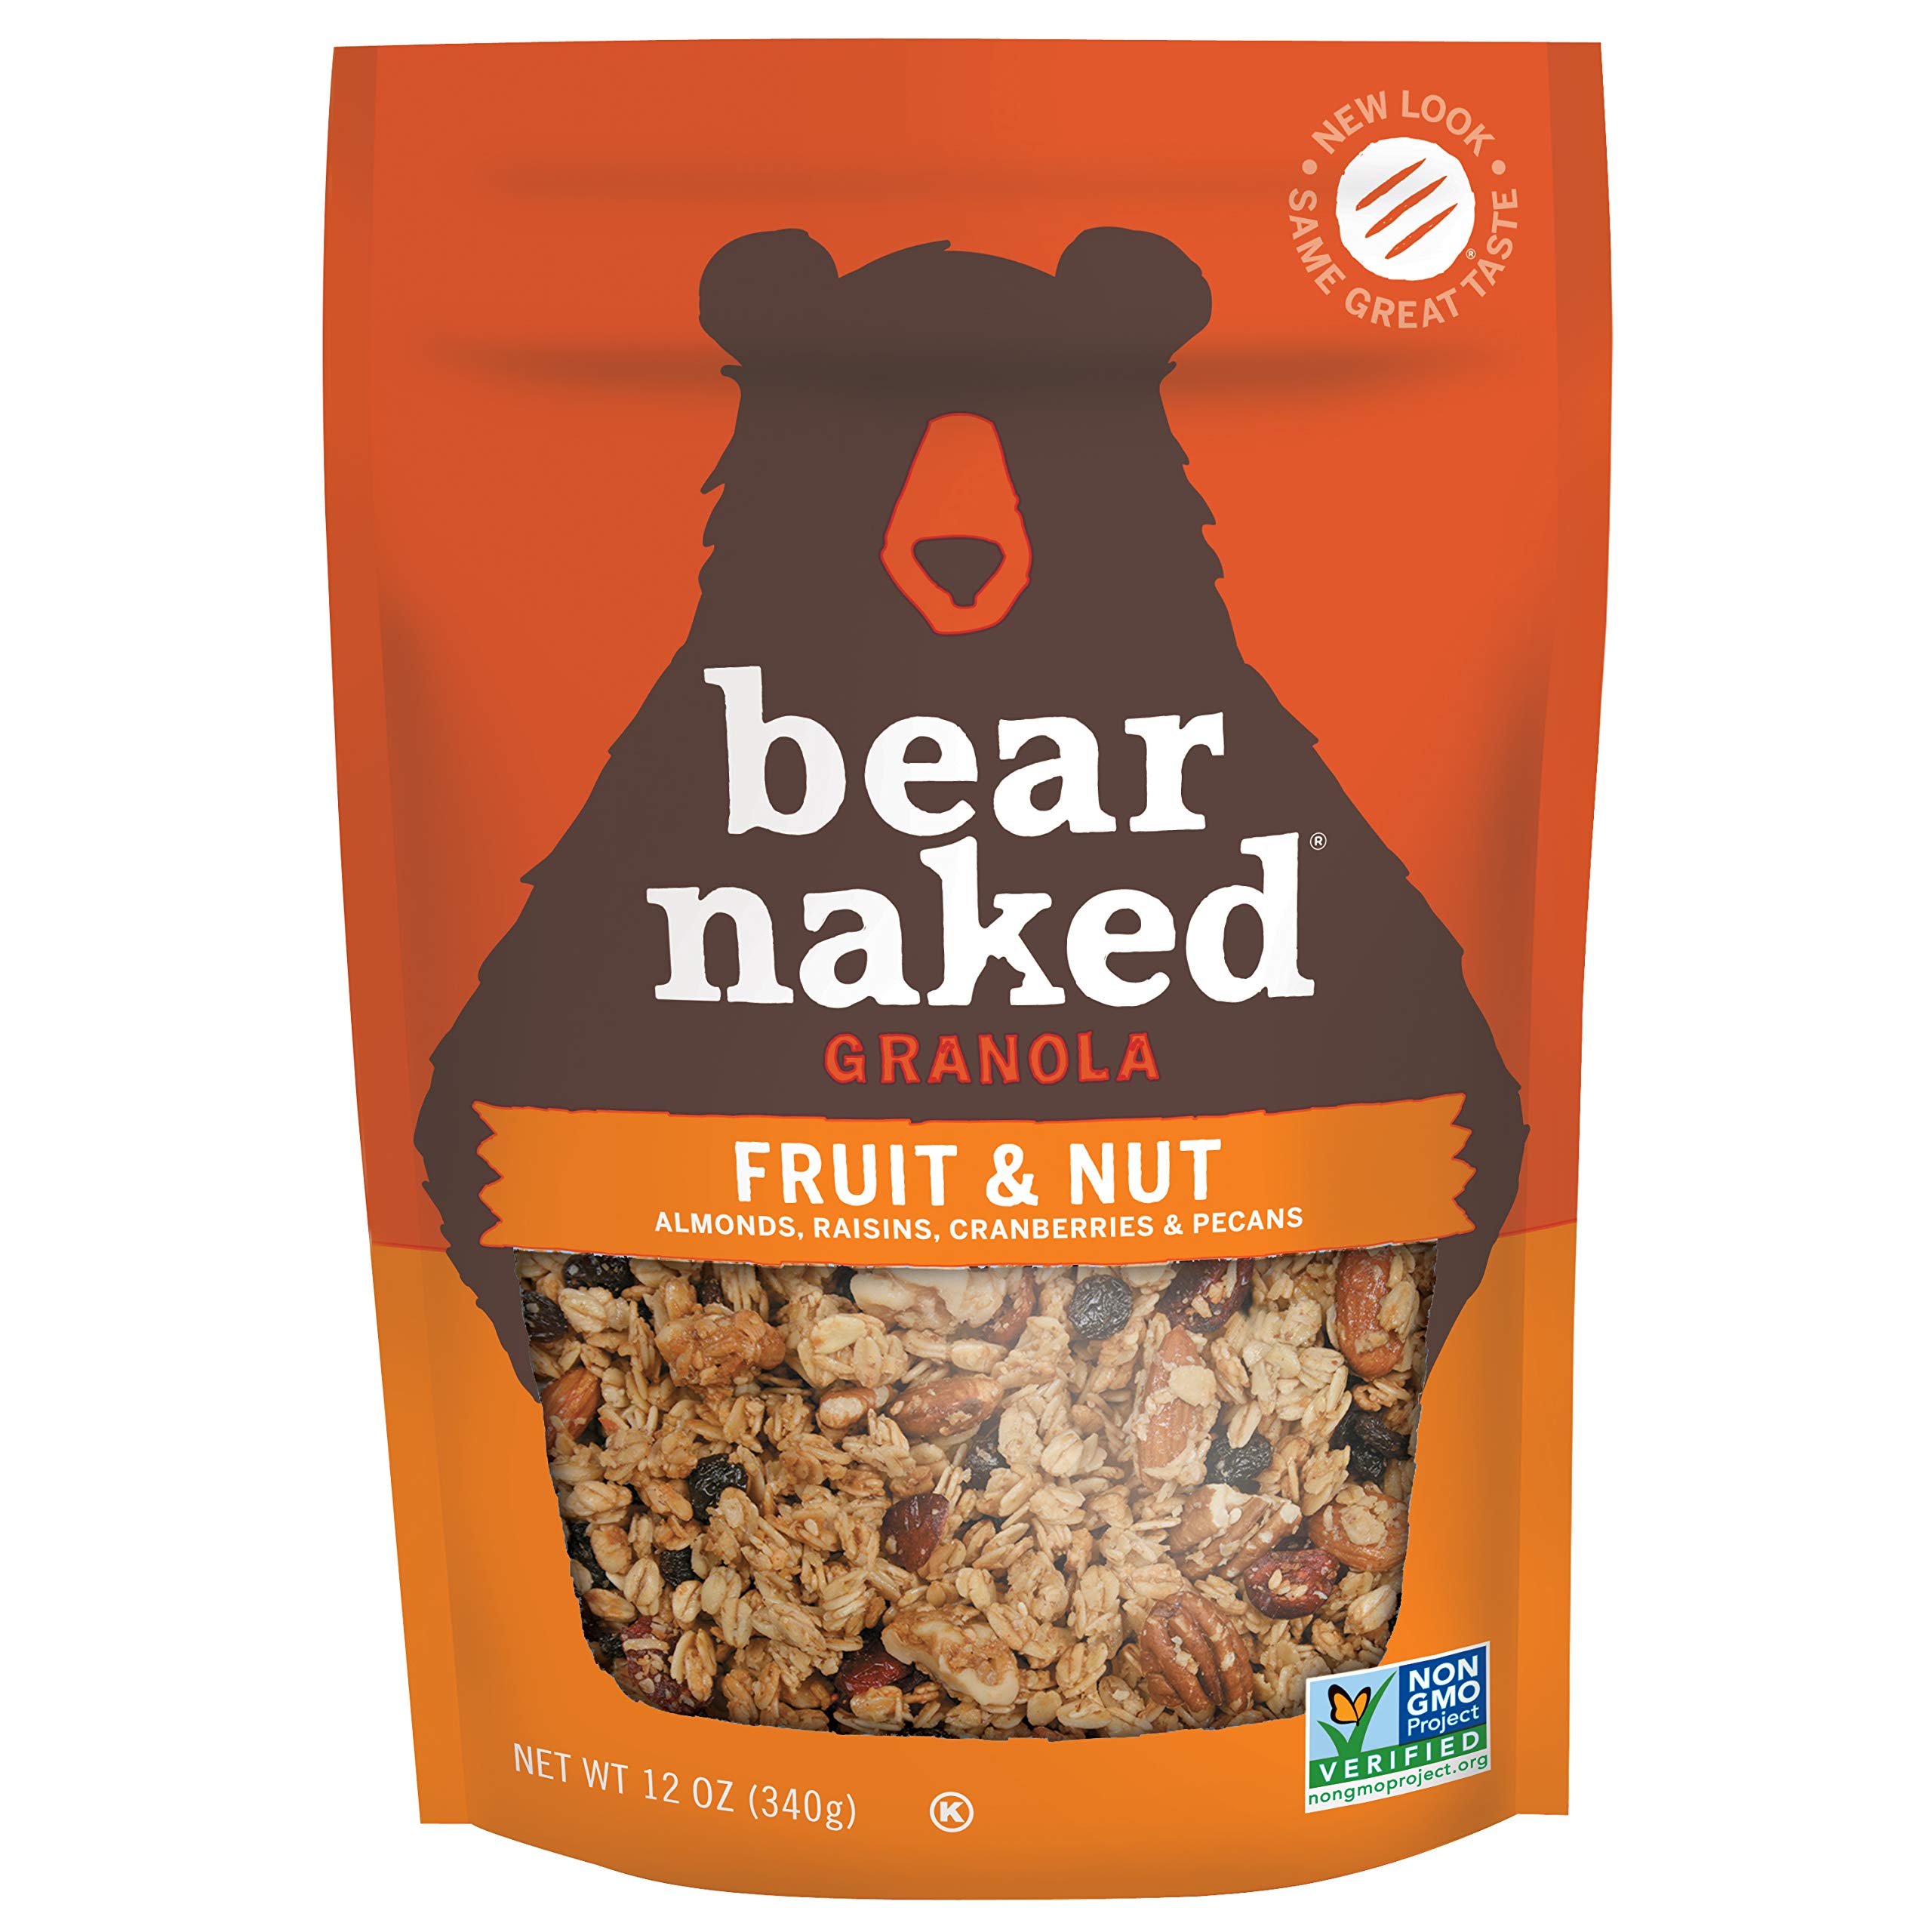 6 Pack of Bear Naked Granola for $8.55 Shipped